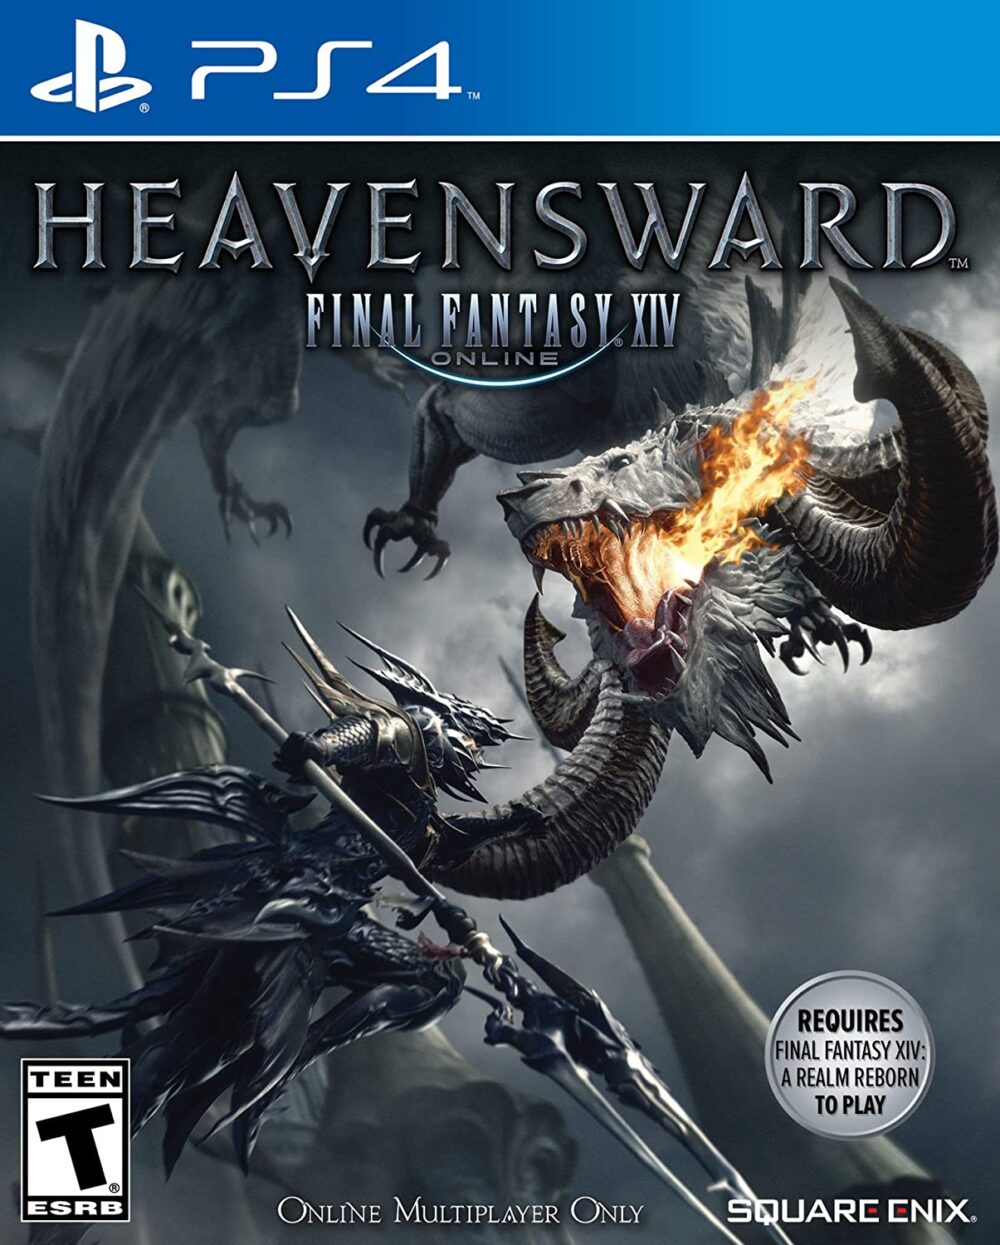 Final Fantasy XIV: Heavensward for PS4